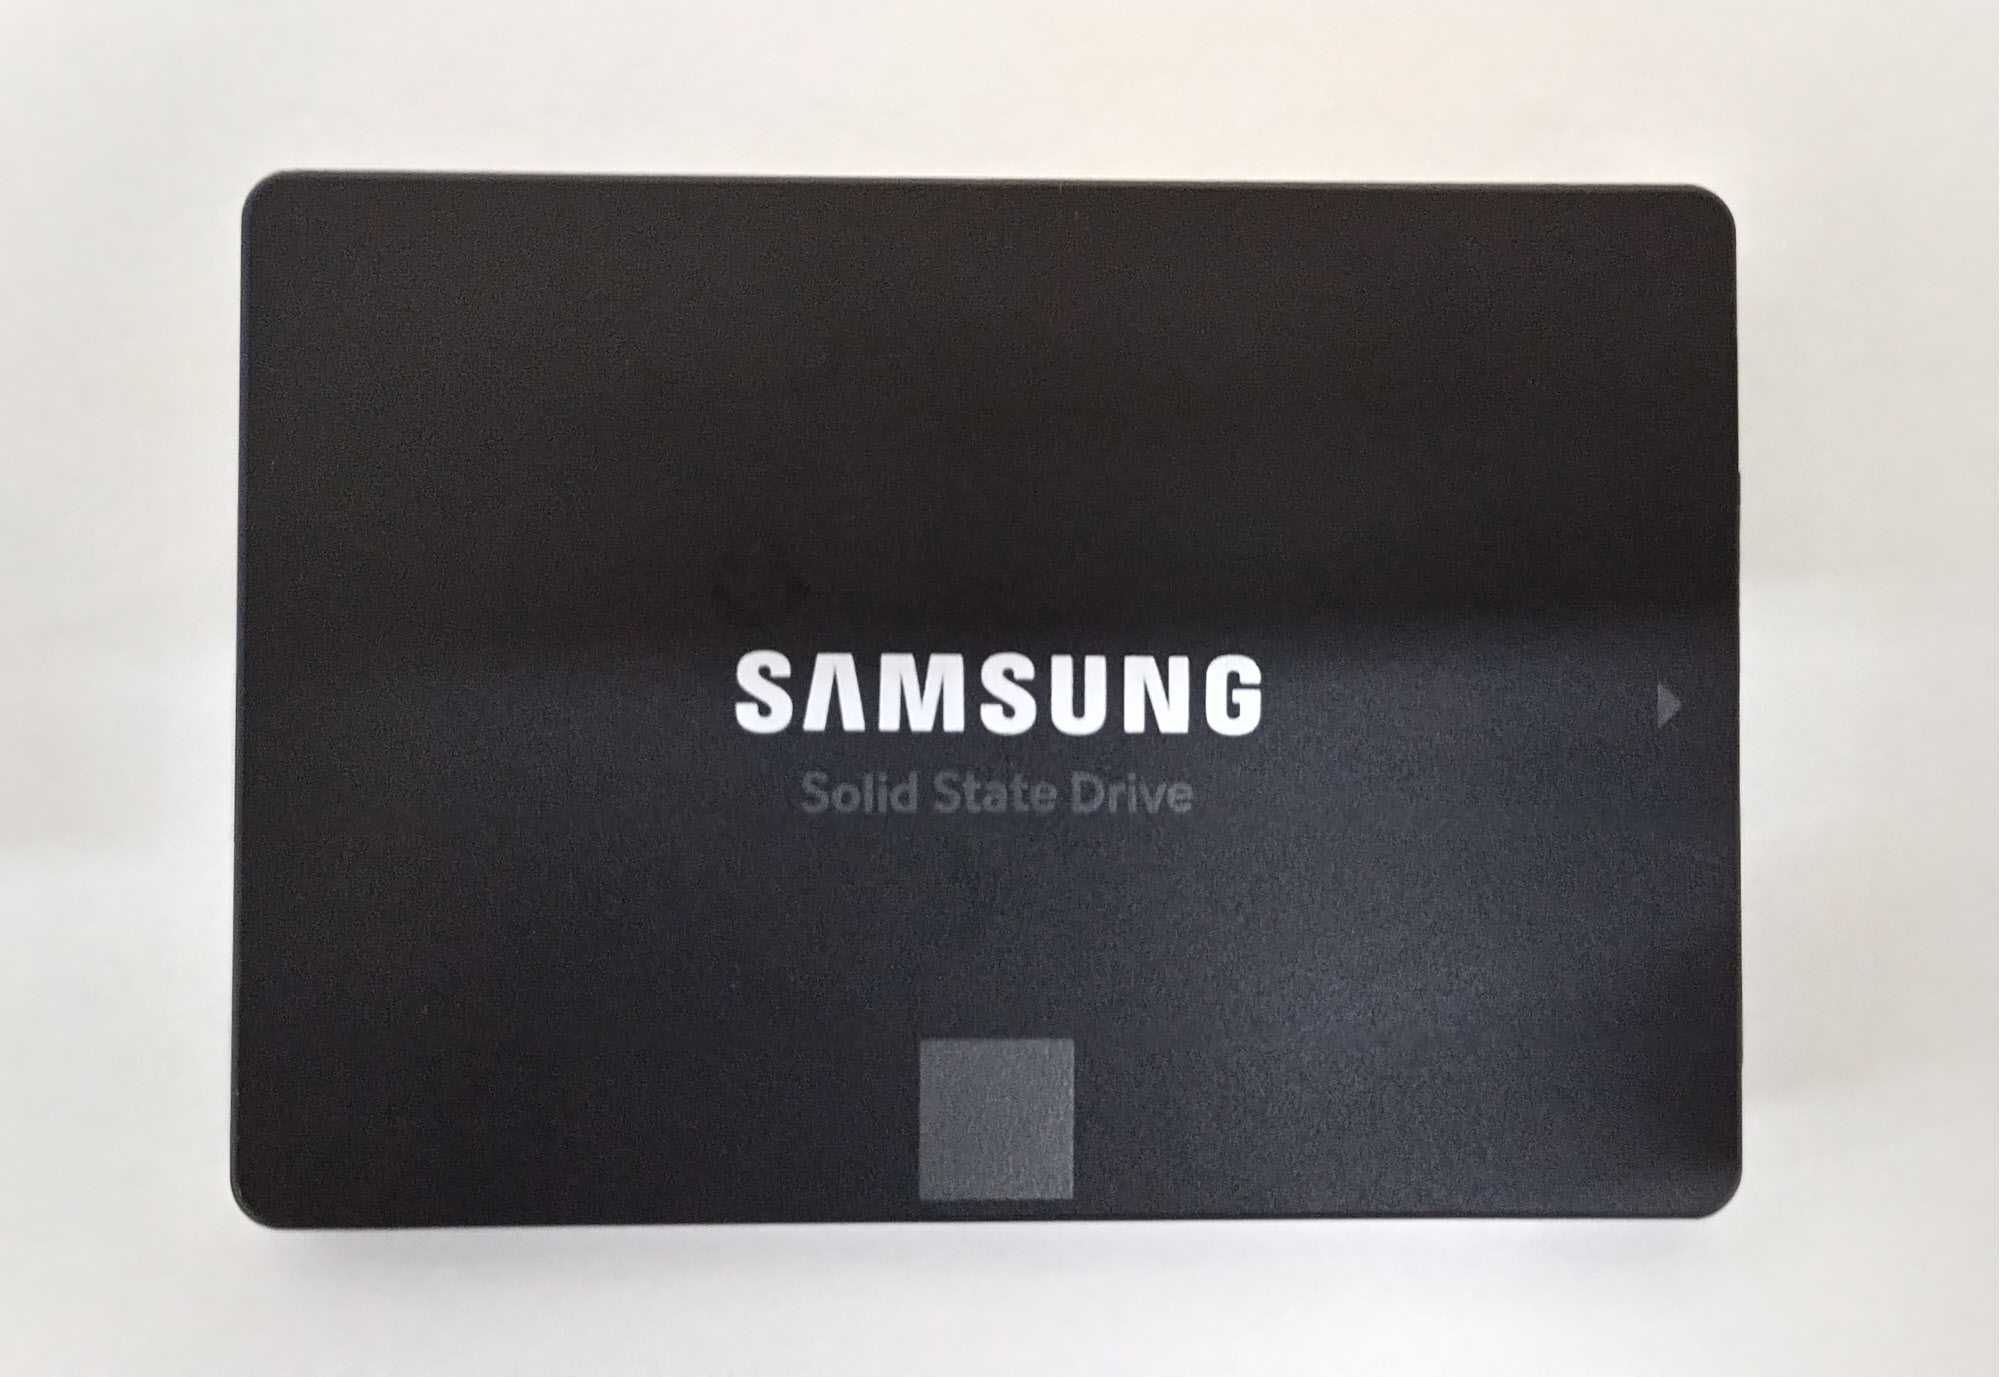 SSD SATA 2.5'' 250GB Samsung 860 EVO